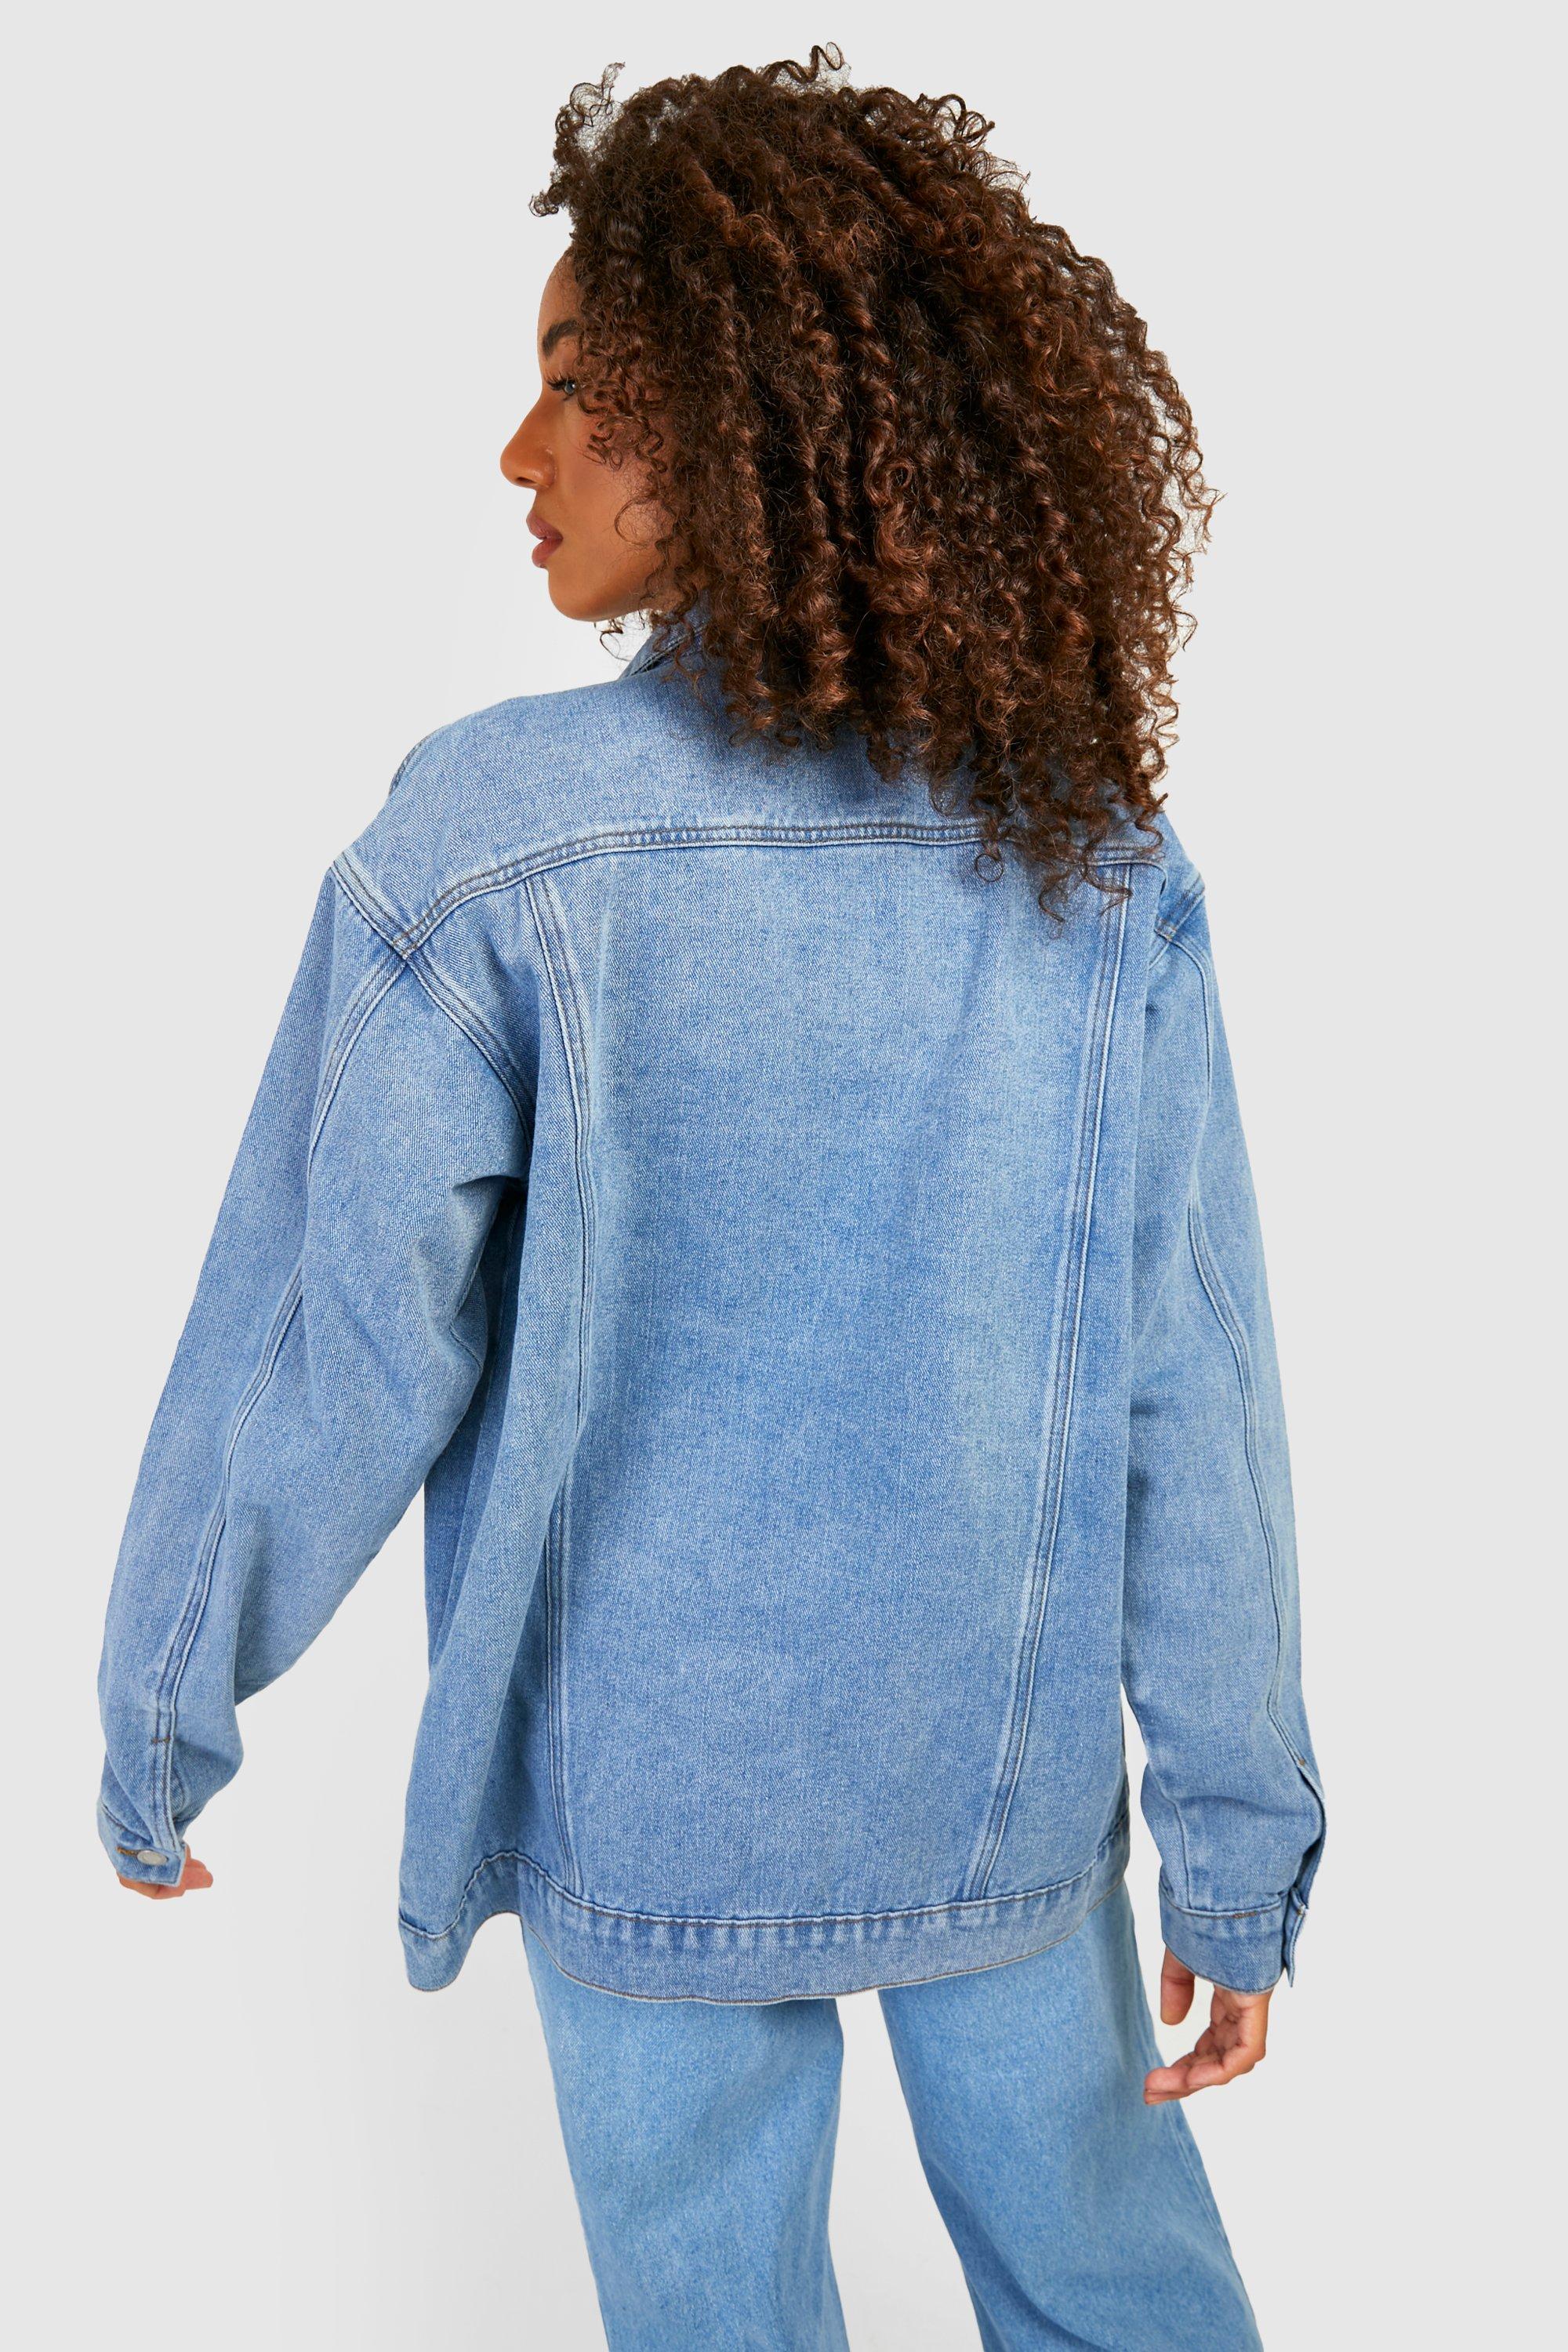 Tall Women's Denim Jacket in Vintage Medium Blue L / Extra Tall / Vintage Medium Blue